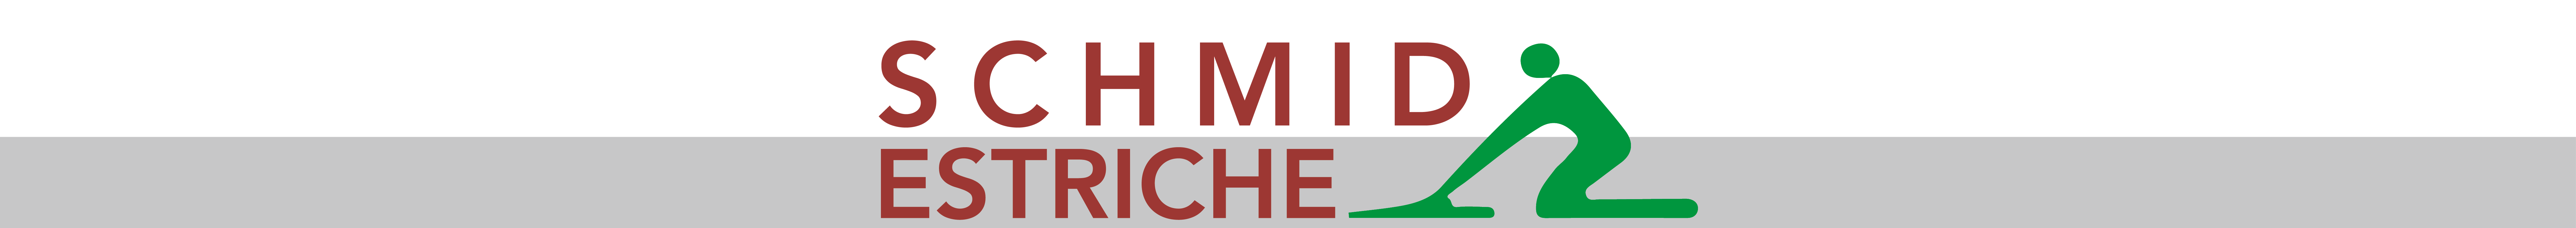 Schmid Logo 4c 01